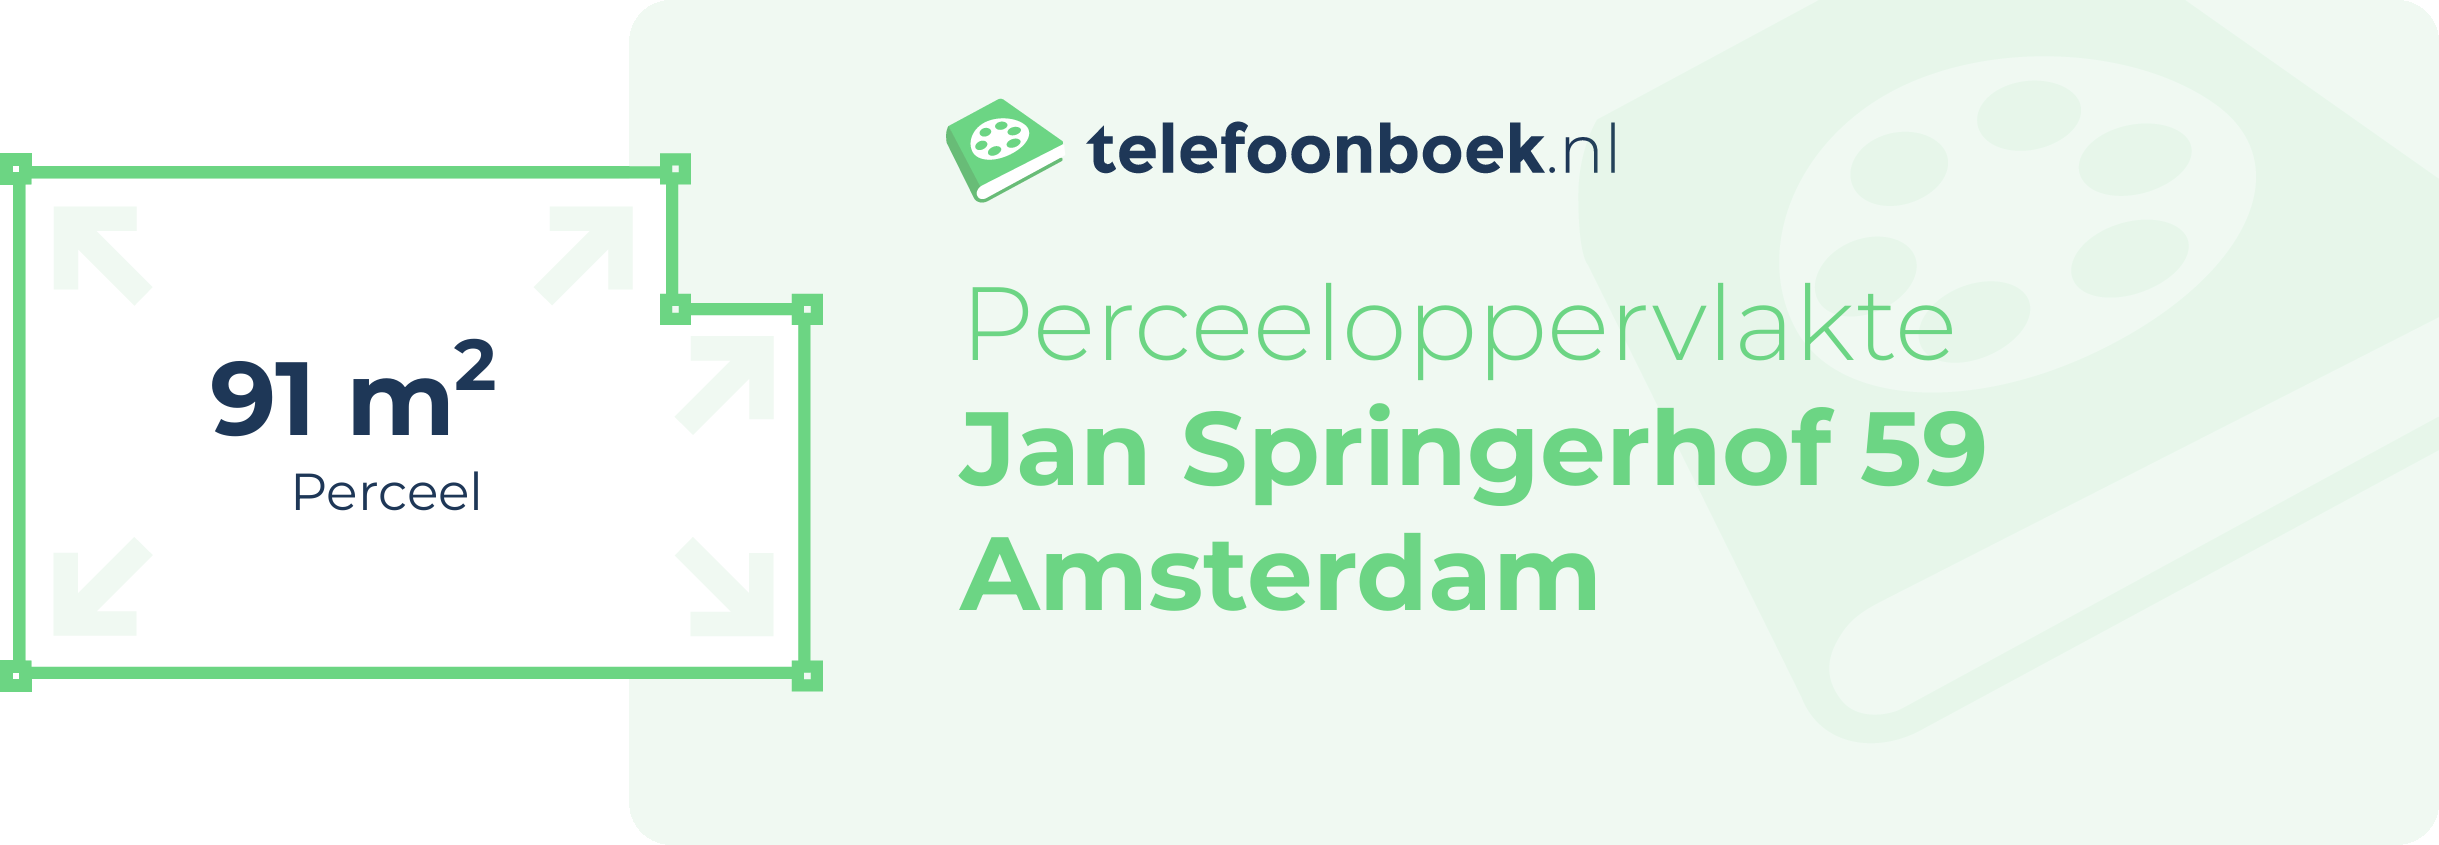 Perceeloppervlakte Jan Springerhof 59 Amsterdam